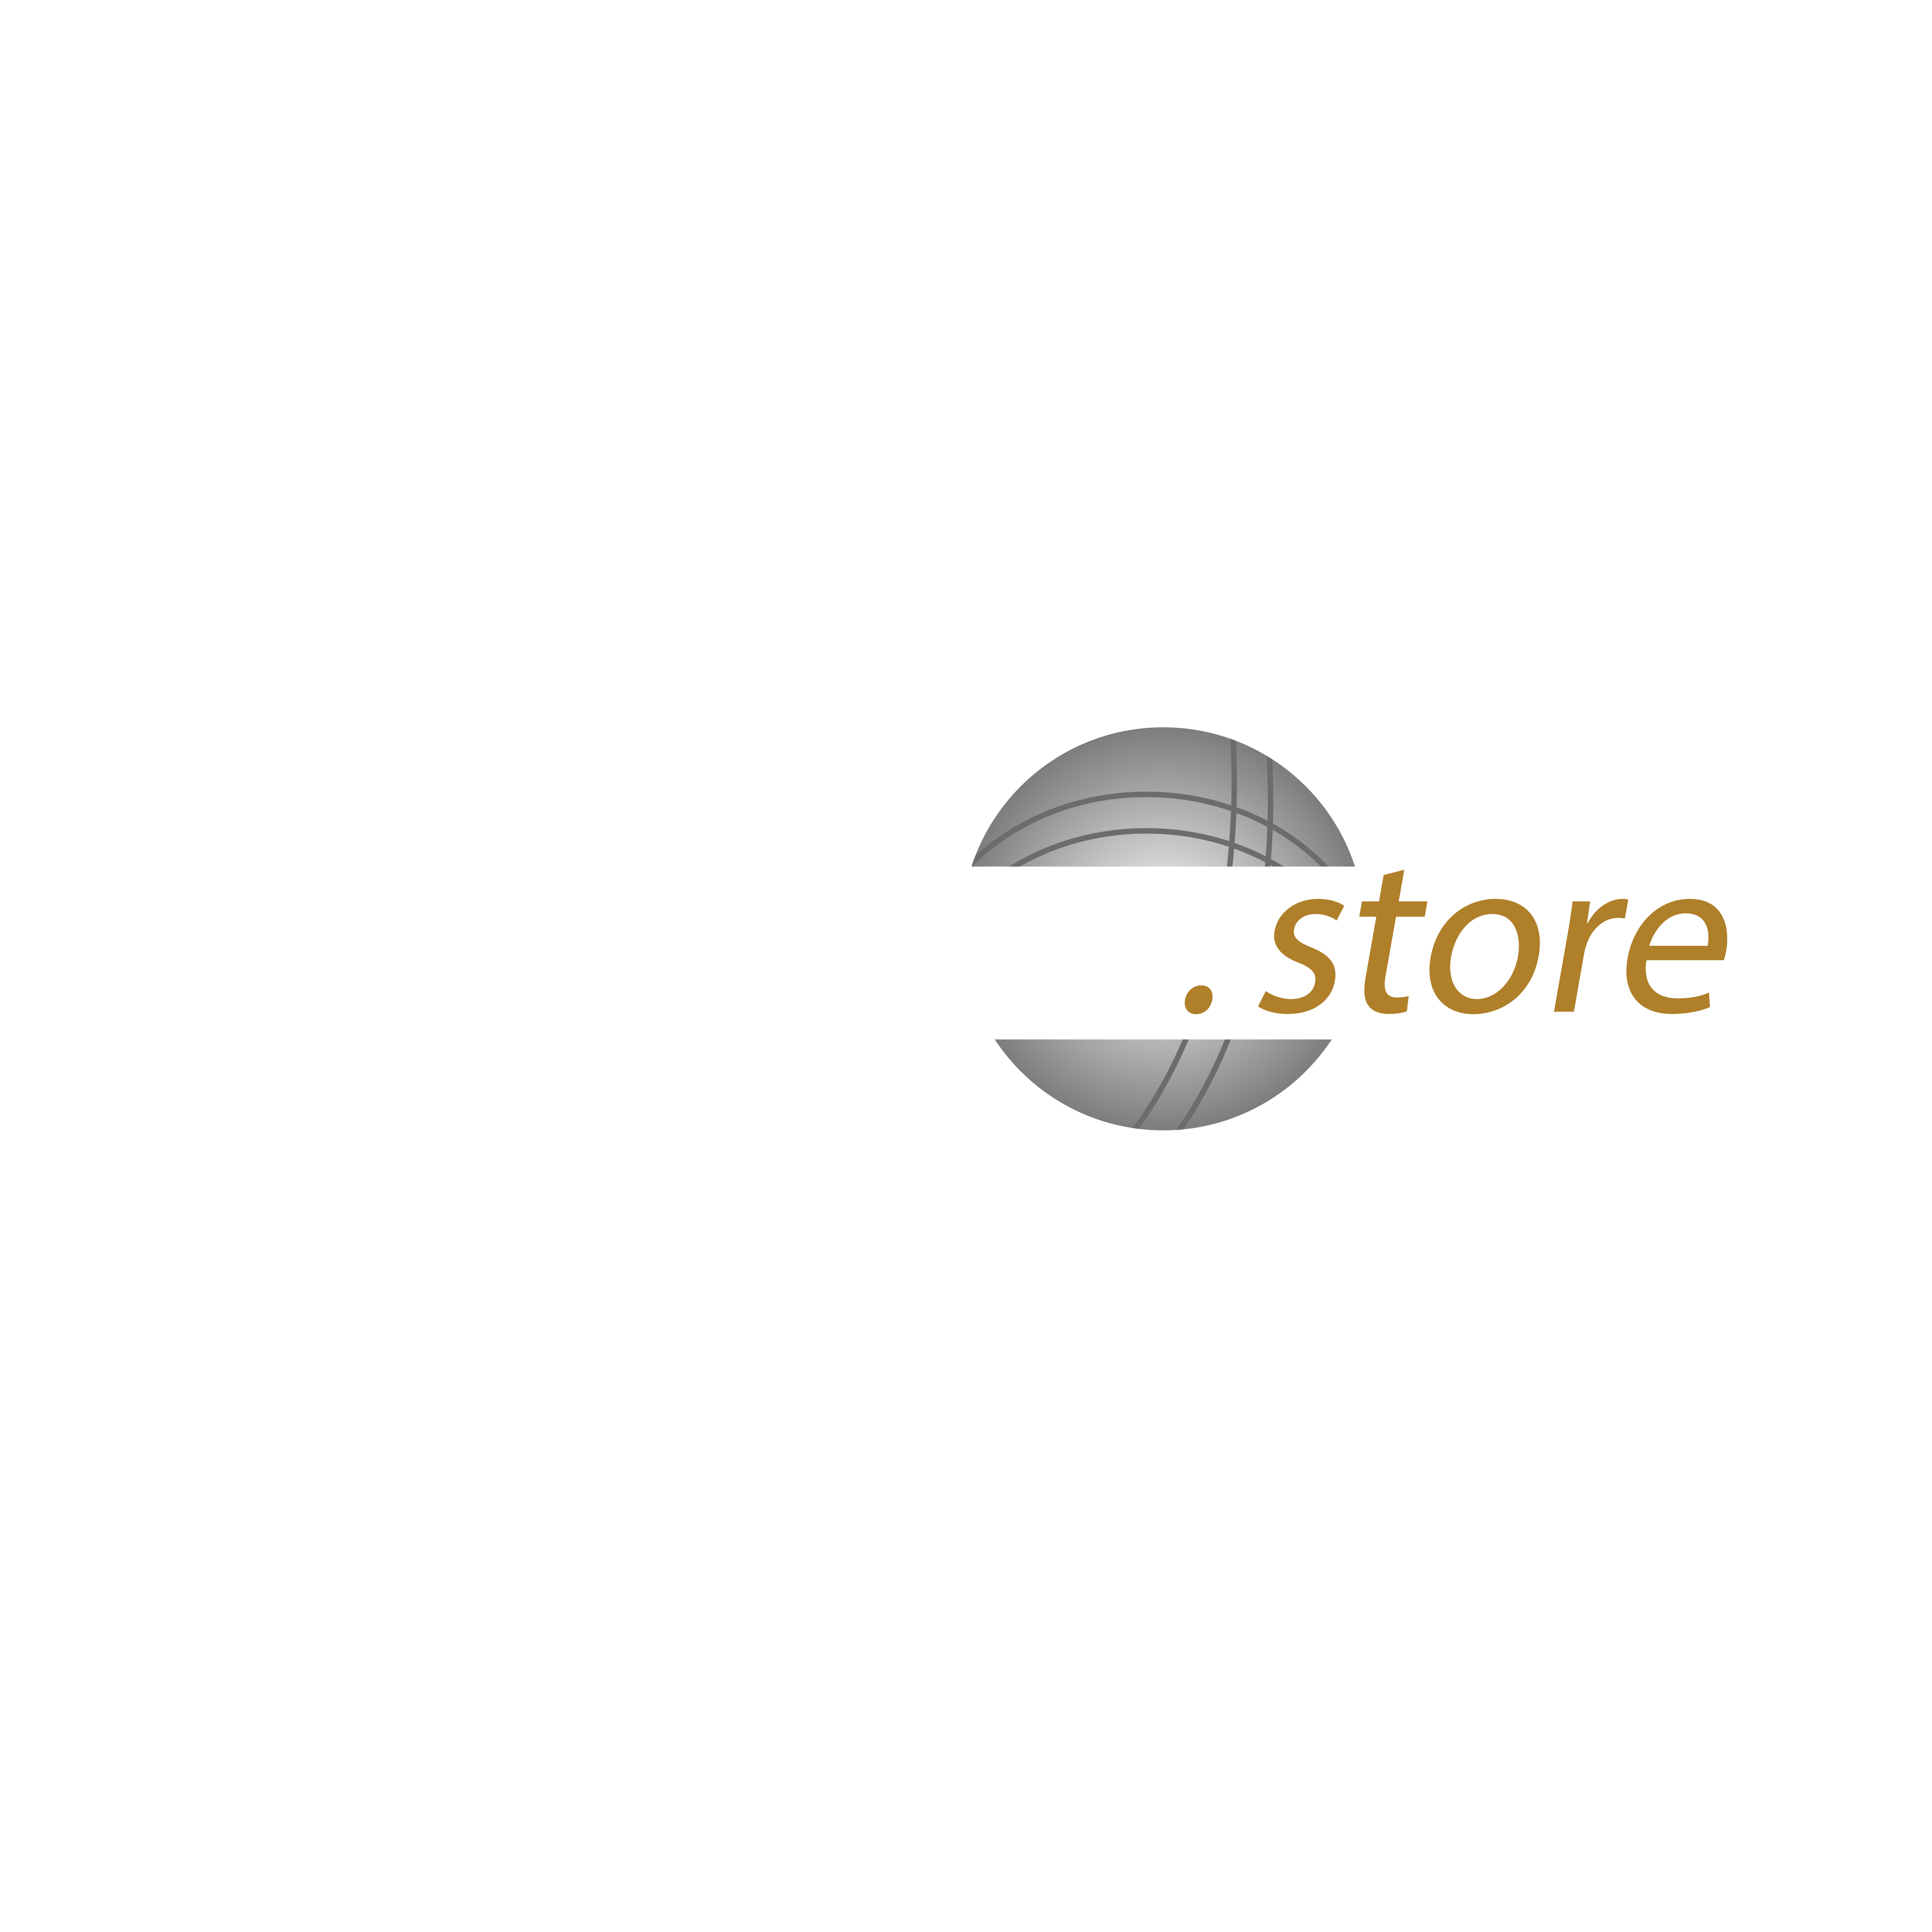 Petanque-store